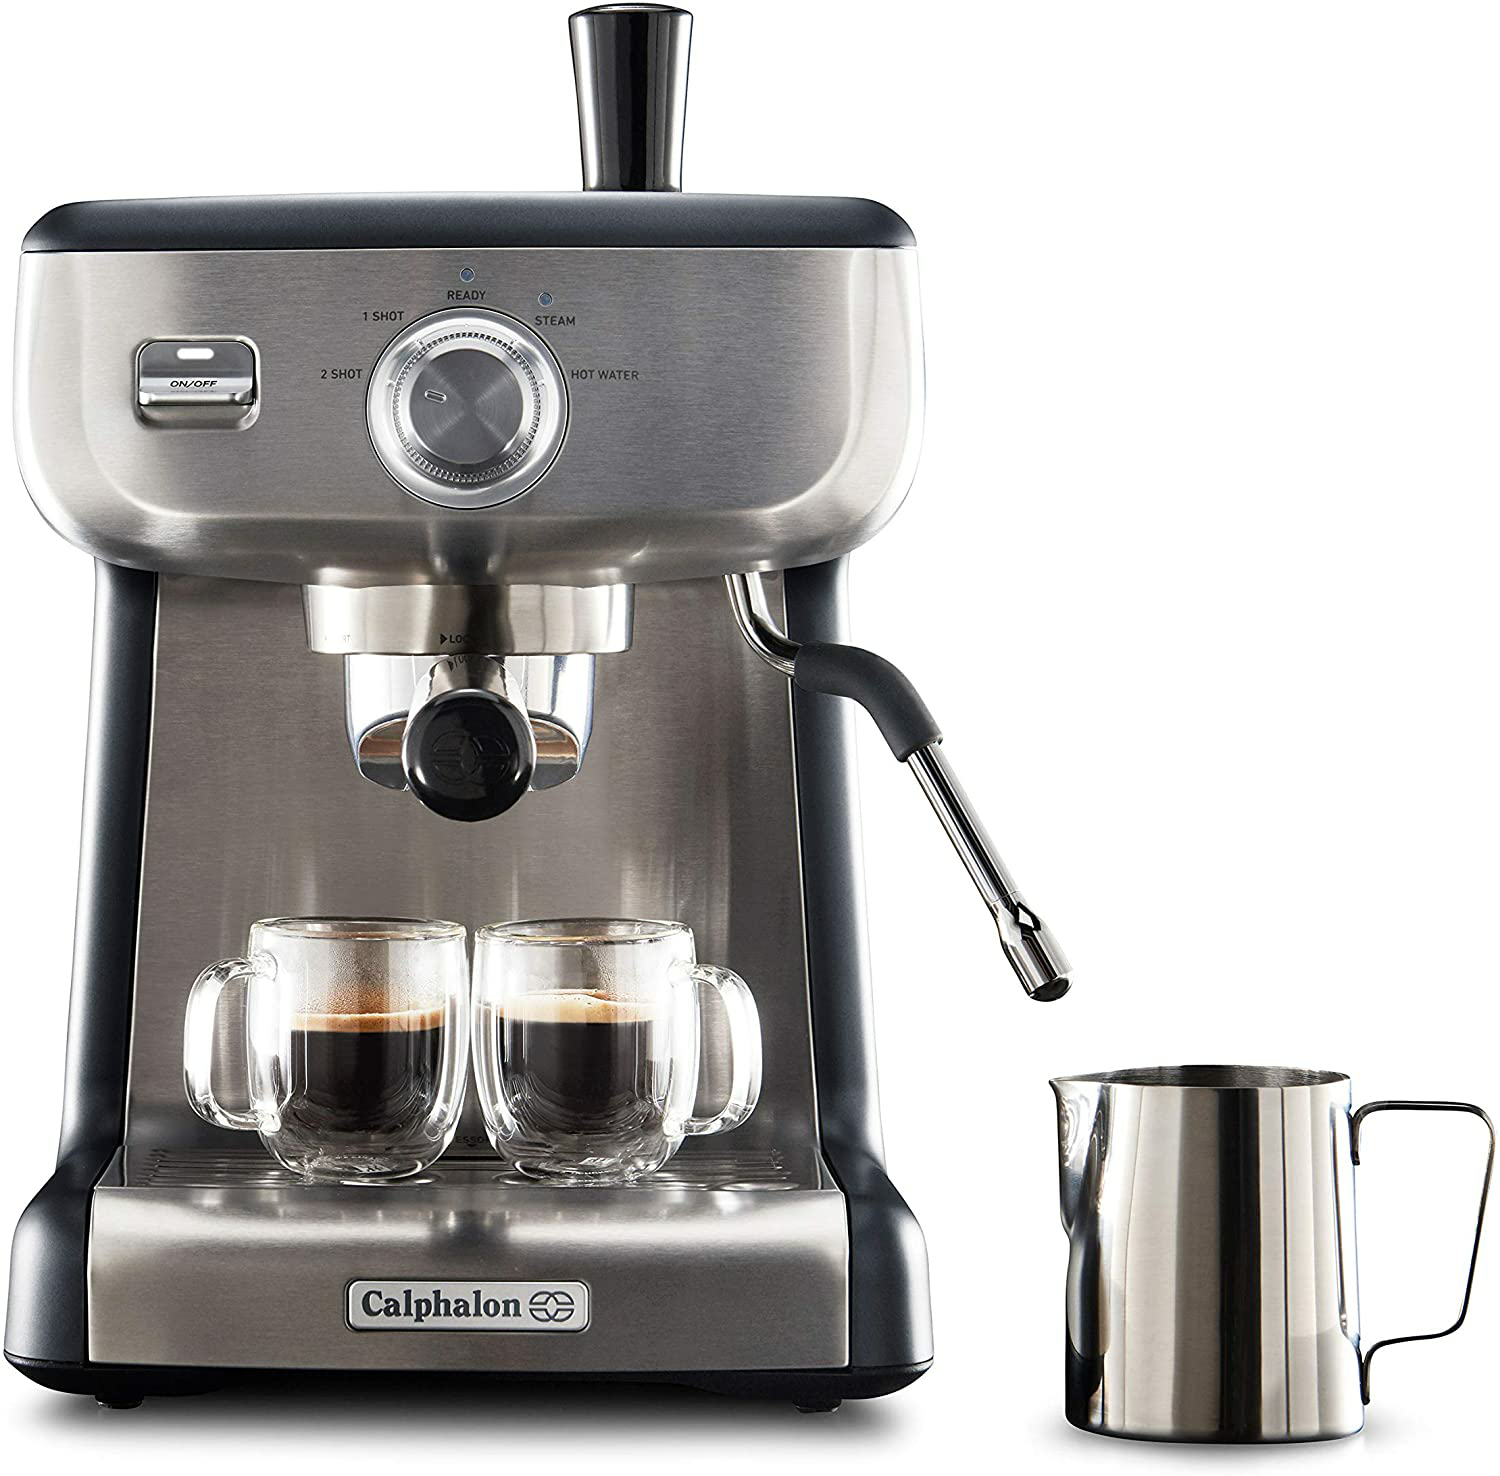 Amazon.com: Calphalon BVCLECMP1 Temp iQ Espresso Machine with Steam Wand, Stainless Steel: Kitchen & Dining $210.96